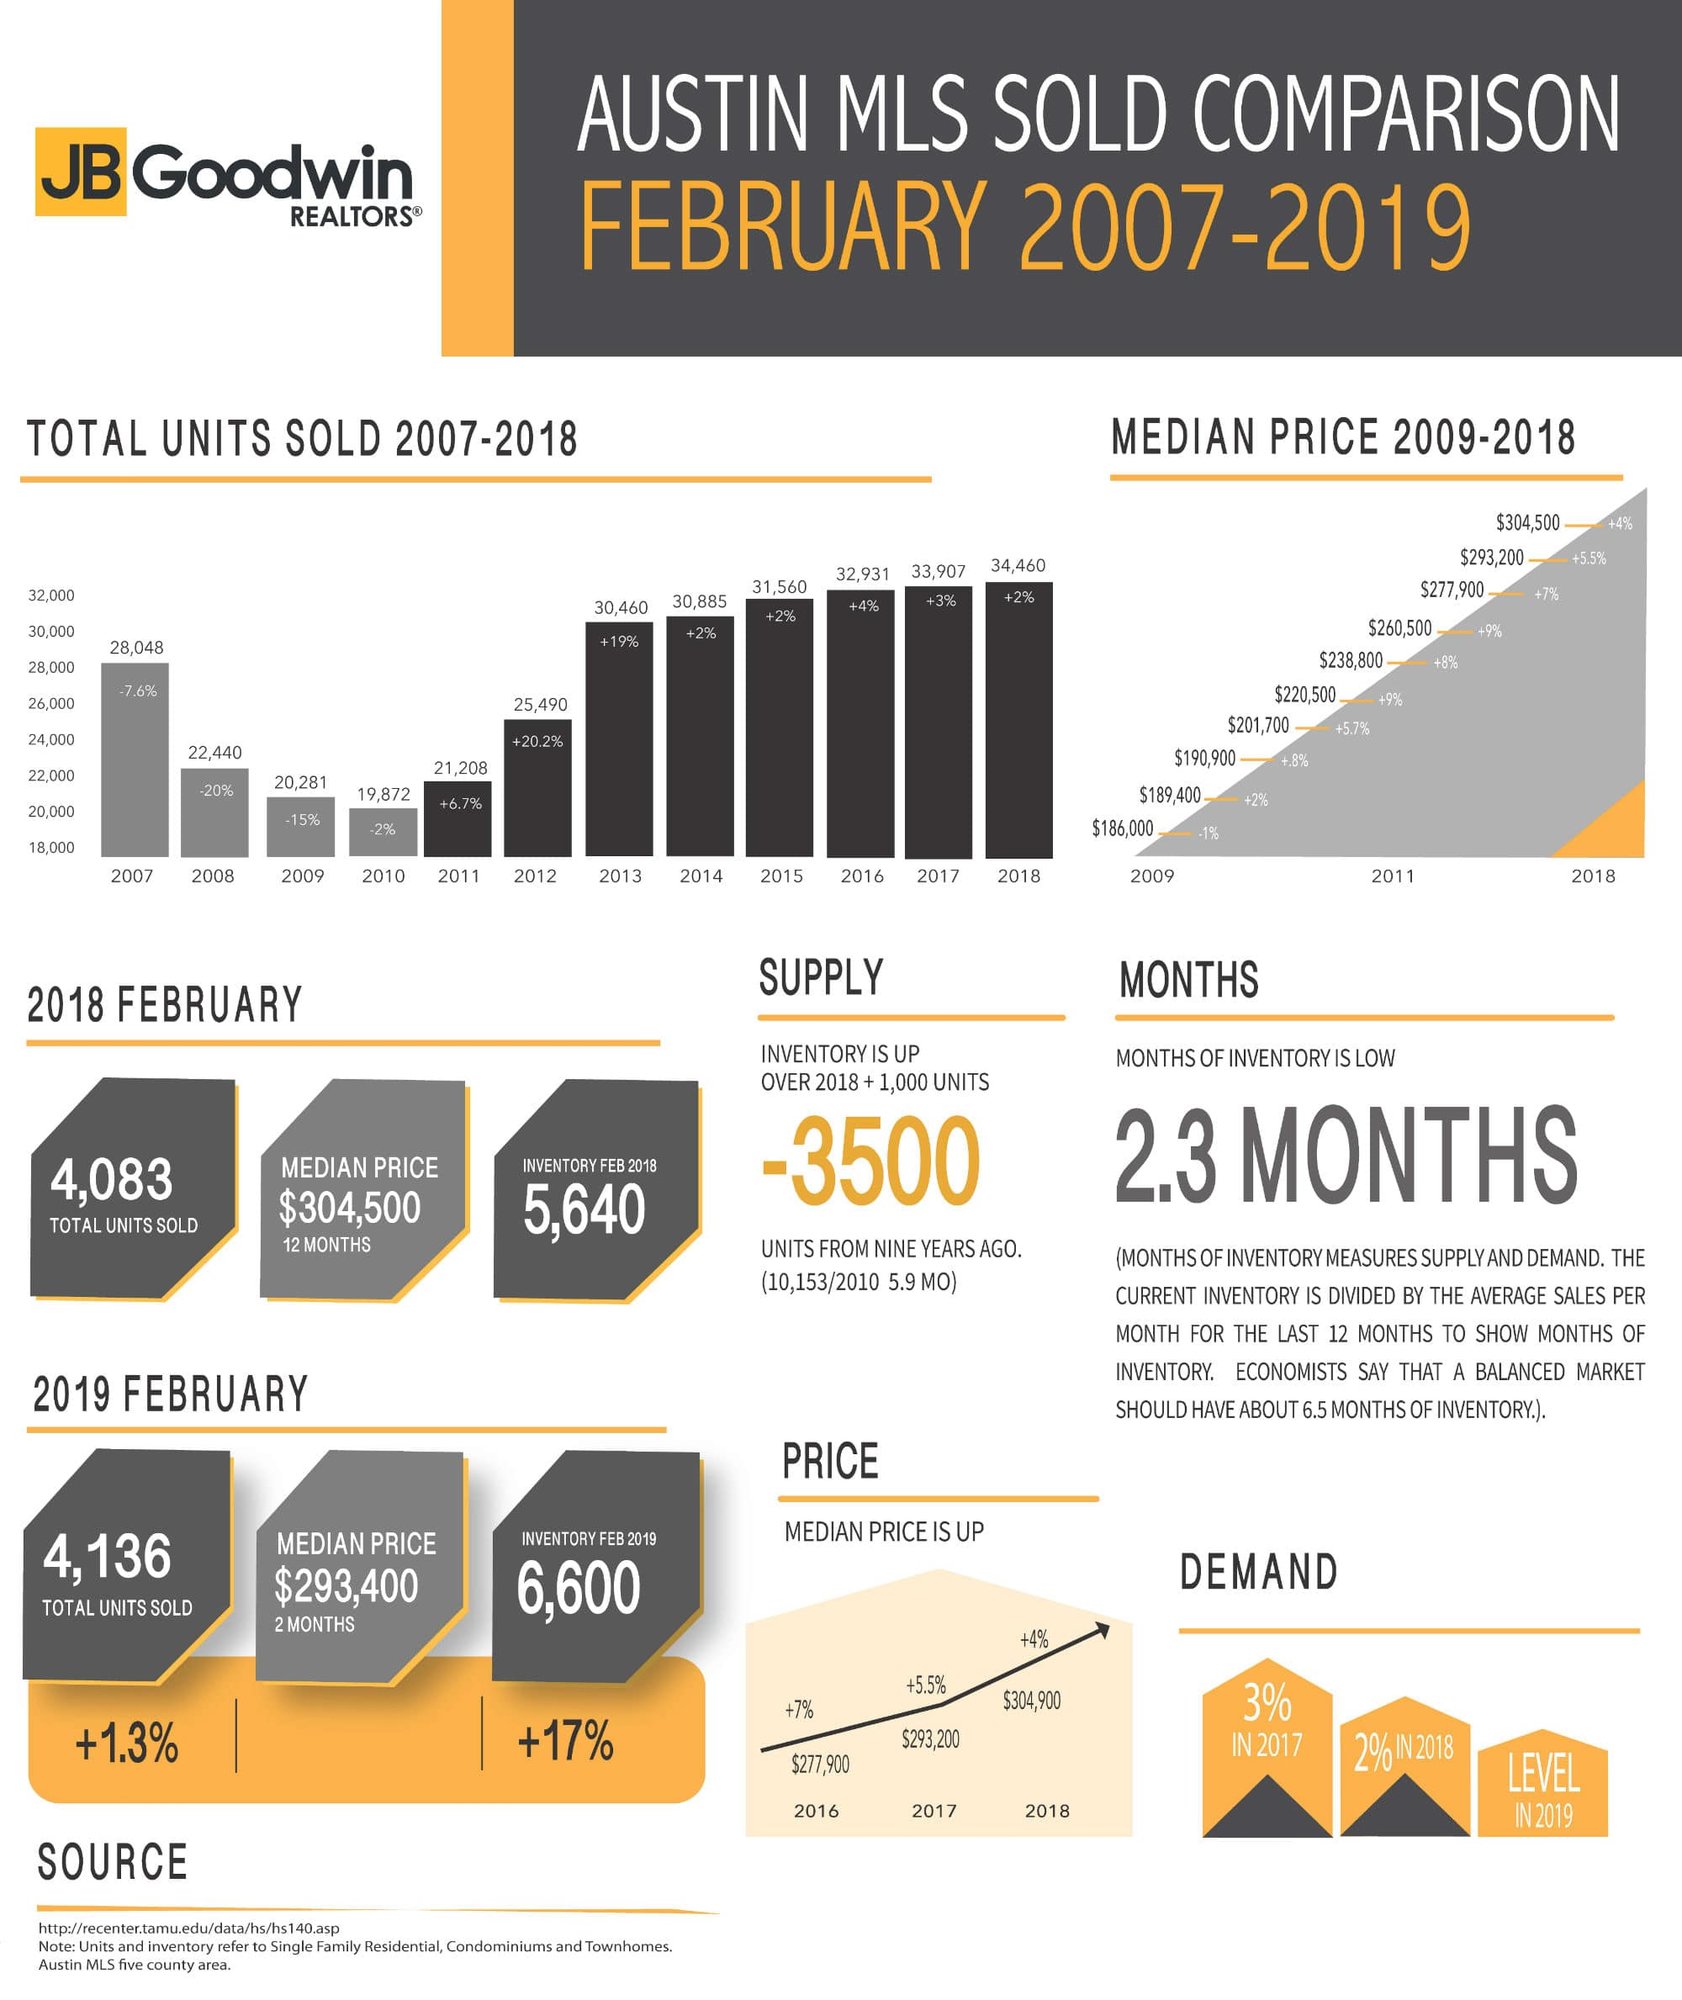 austin mls sold comparison - February 2019